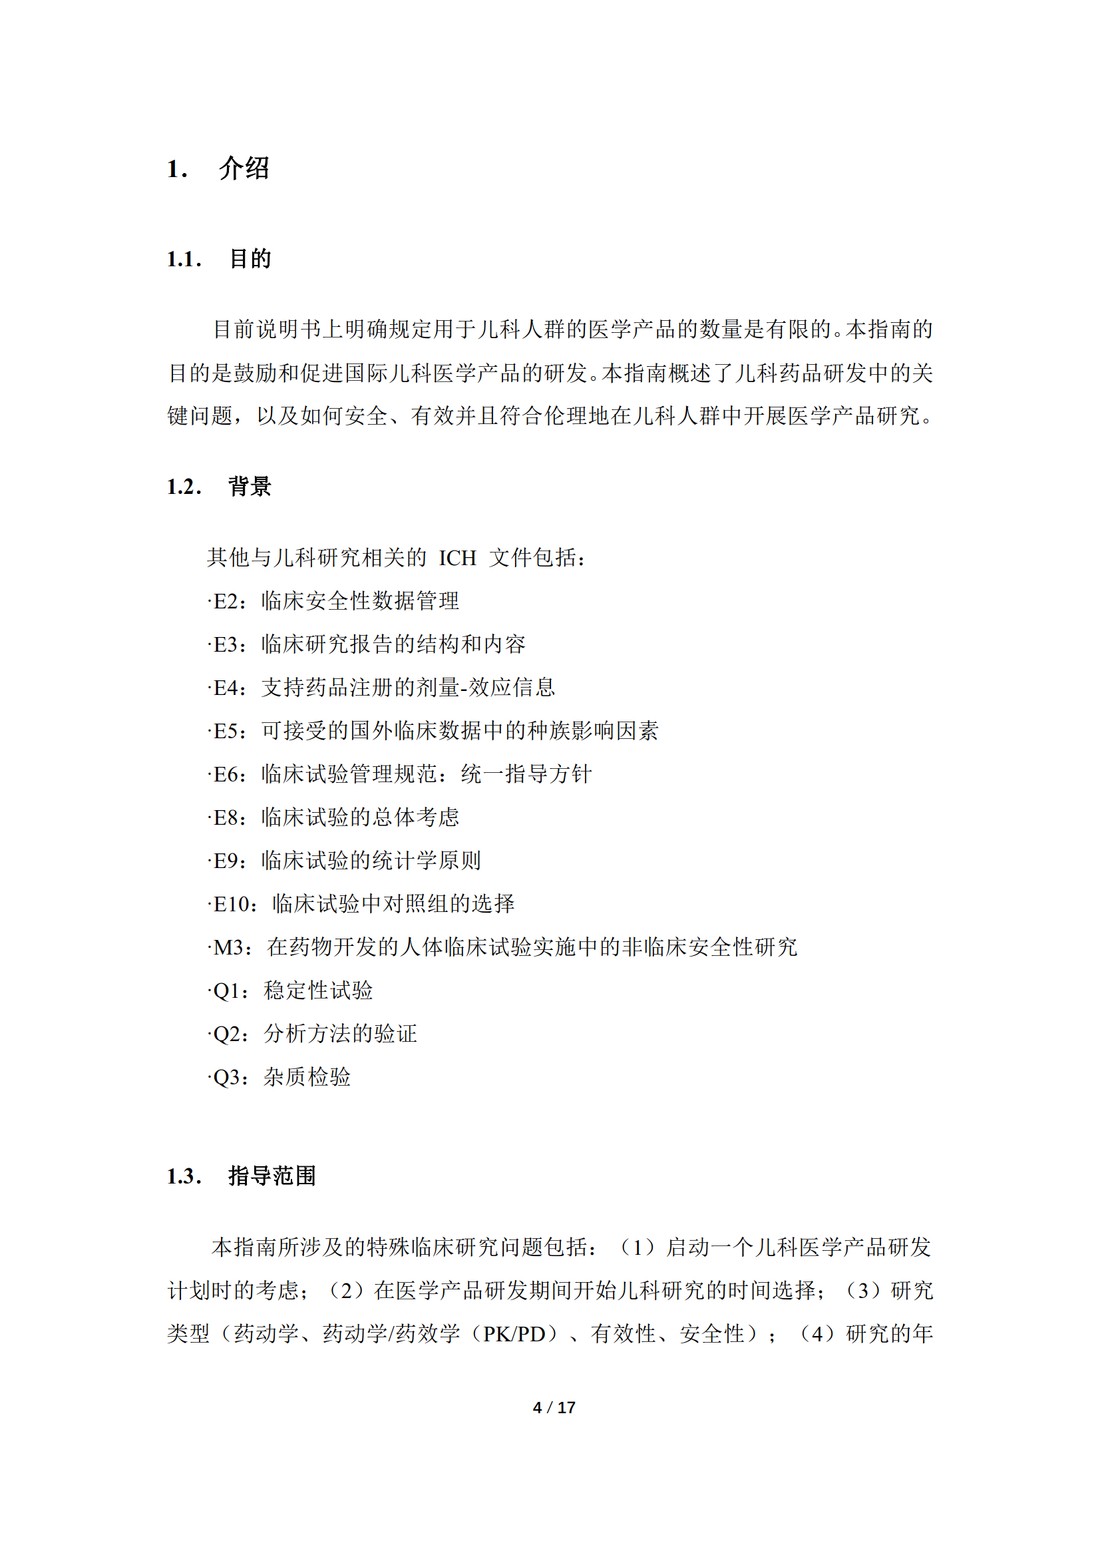 E11：用于儿科人群的医学产品的临床研究（中文翻译公开征求意见稿）_04.jpg